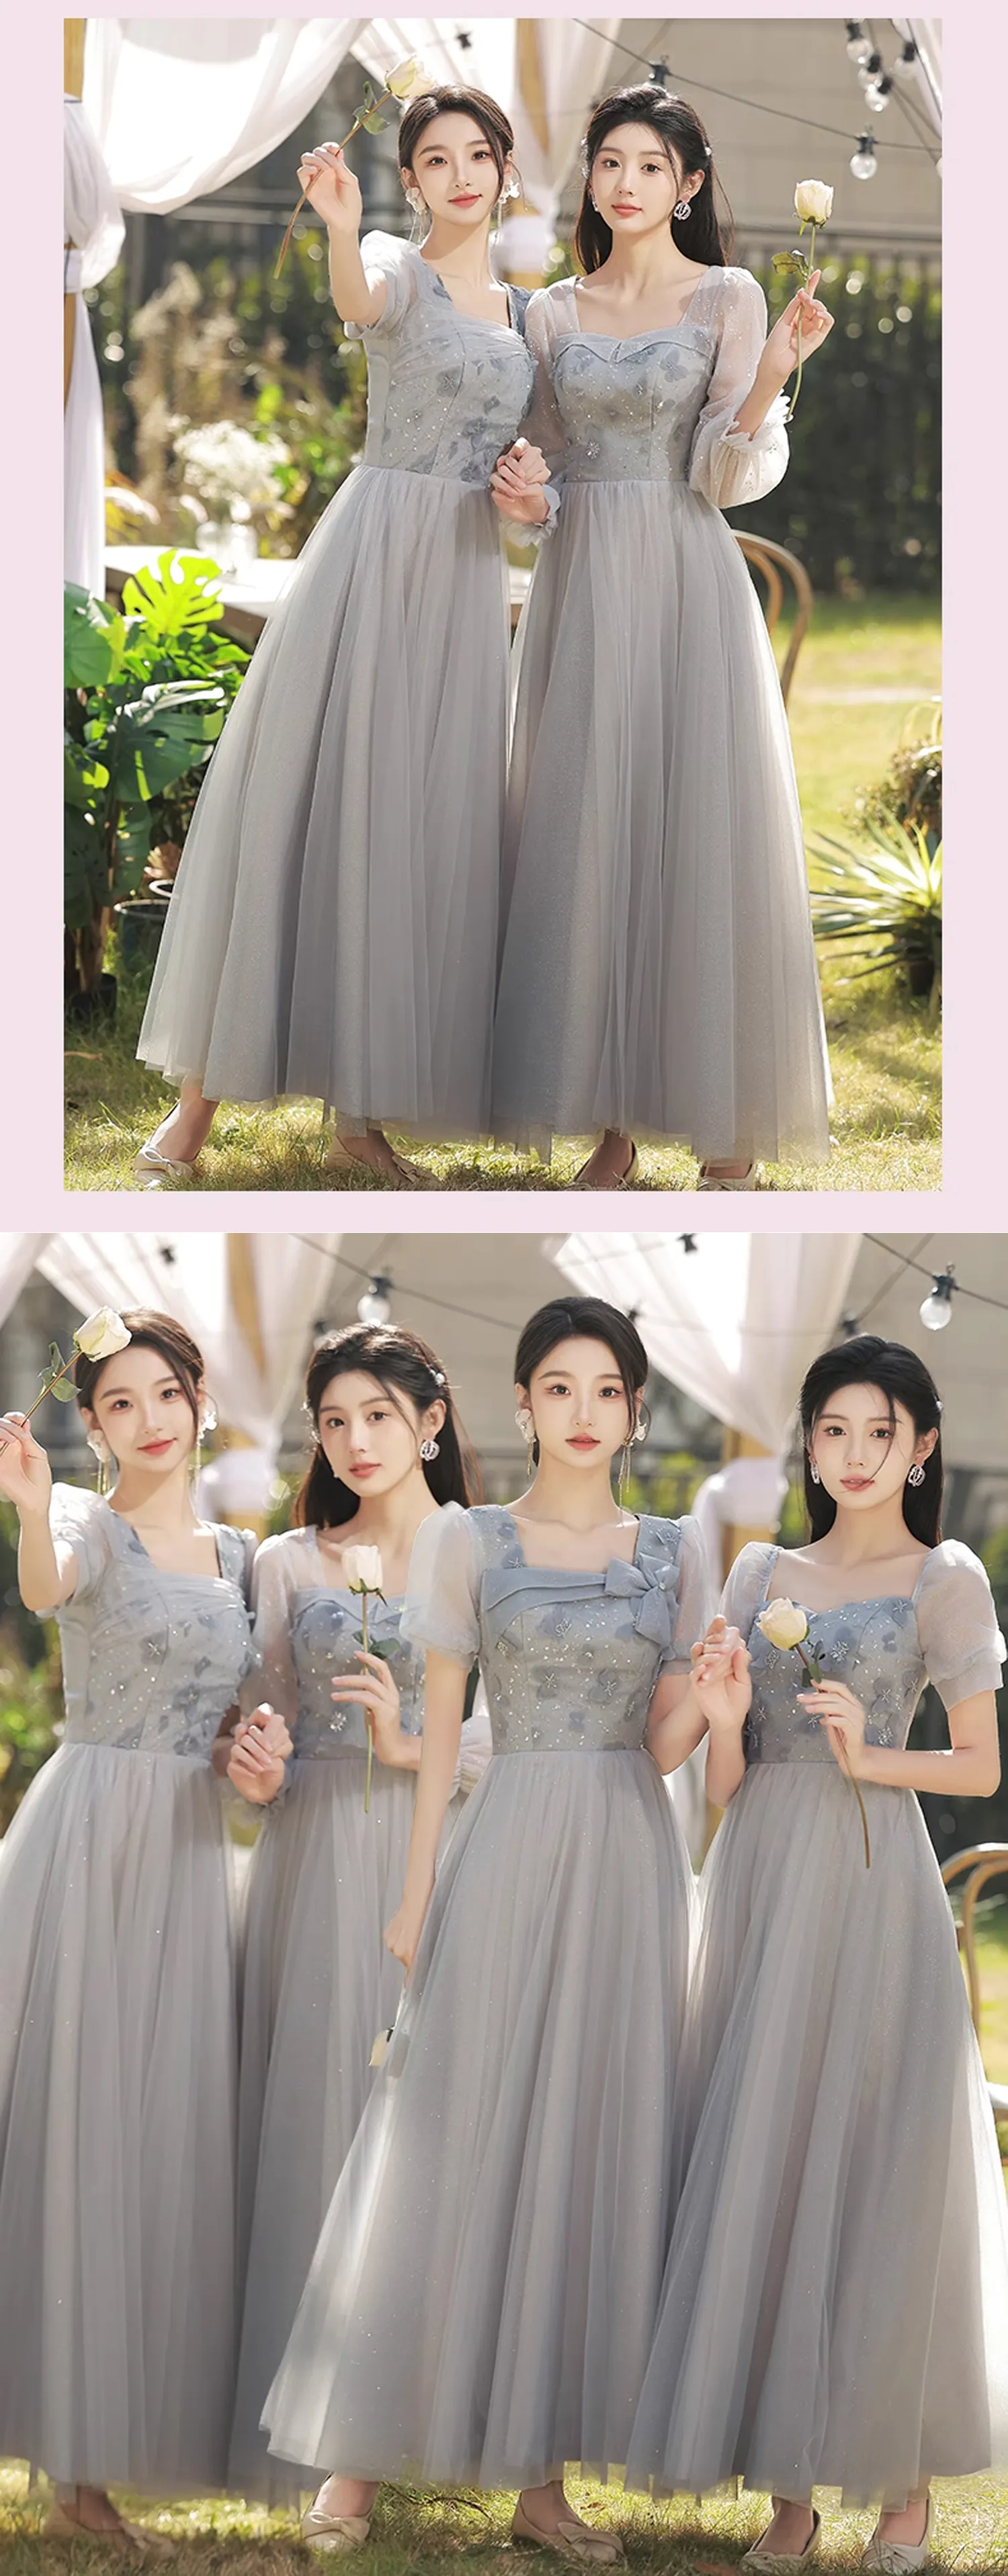 Sweet-Short-Sleeve-Grey-Bridesmaid-Maxi-Dress-Wedding-Party-Gown13